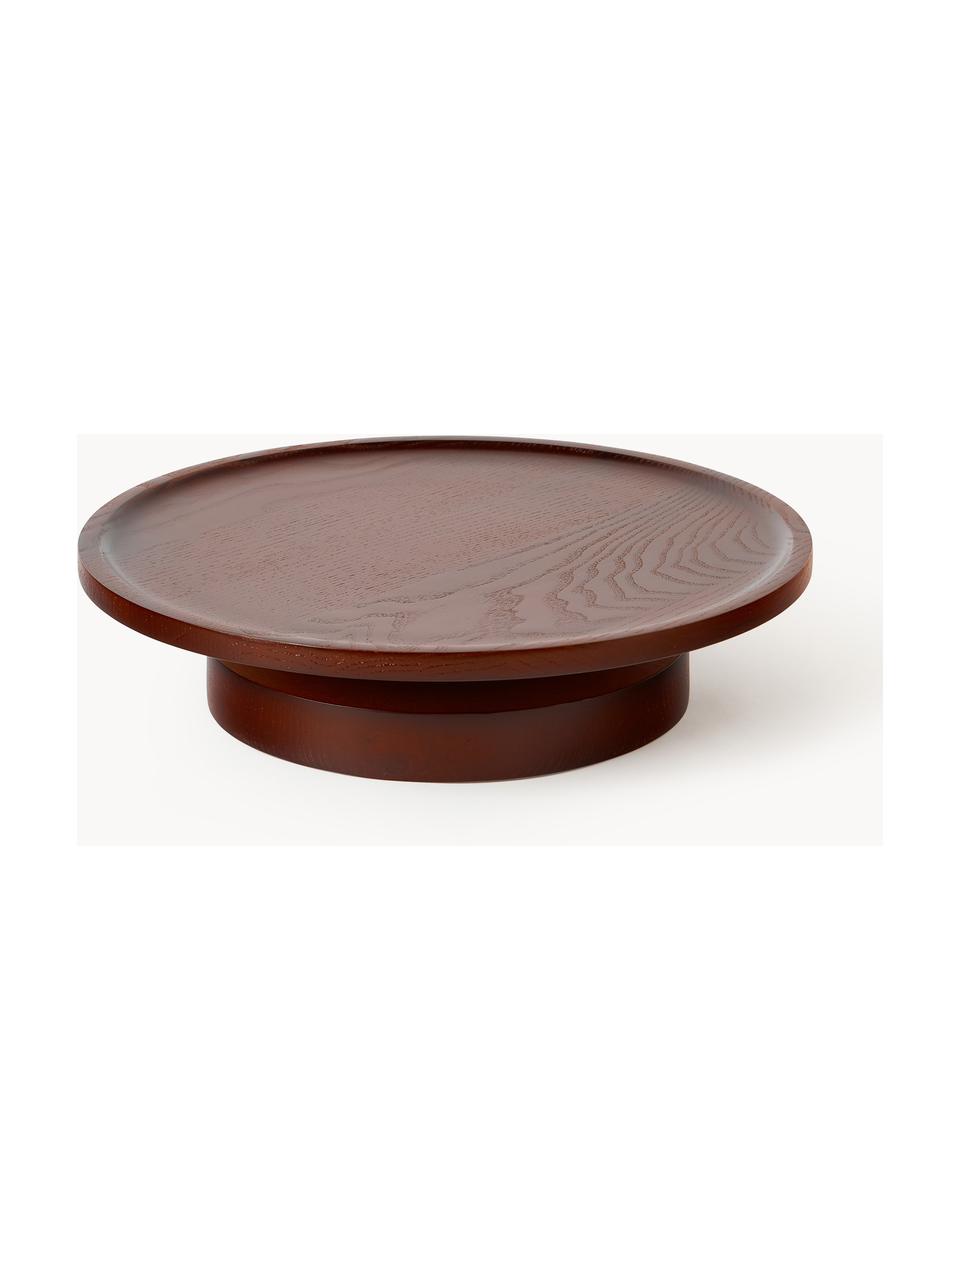 Deko-Tablett Keoni aus Eschenholz, Eschenholz, lackiert

Dieses Produkt wird aus nachhaltig gewonnenem, FSC®-zertifiziertem Holz gefertigt., Eschenholz, dunkel lackiert, Ø 30 cm